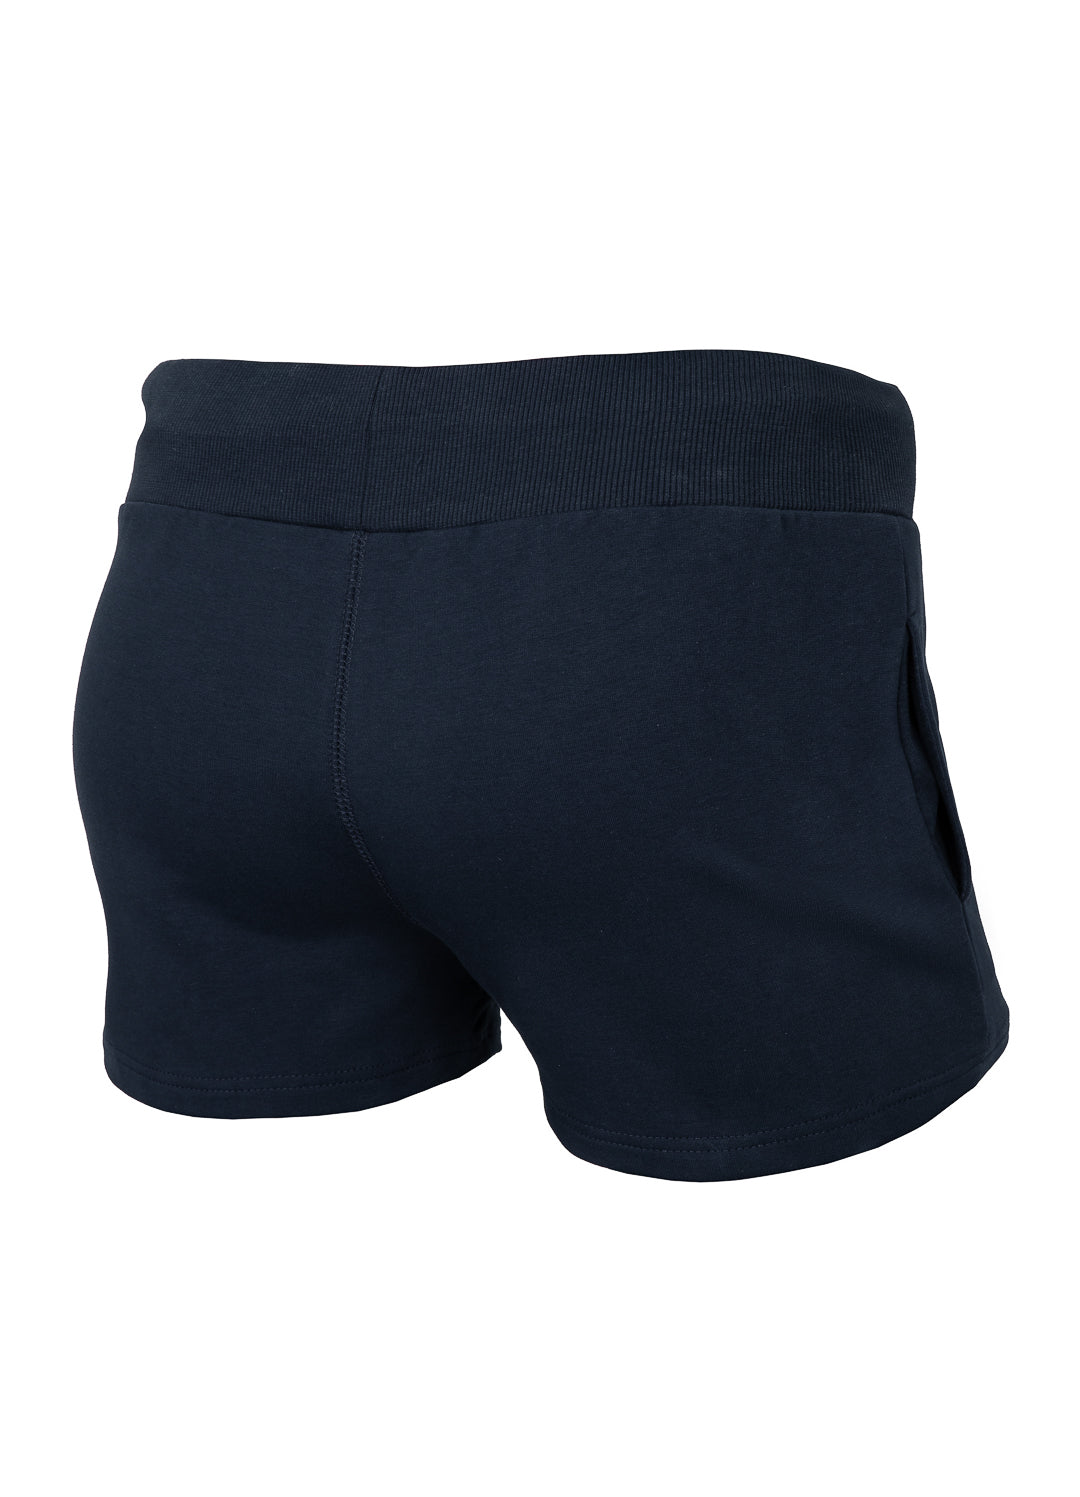 Women&#39;s shorts MARIPOSA French Terry Dark Navy - Pitbull West Coast International Store 